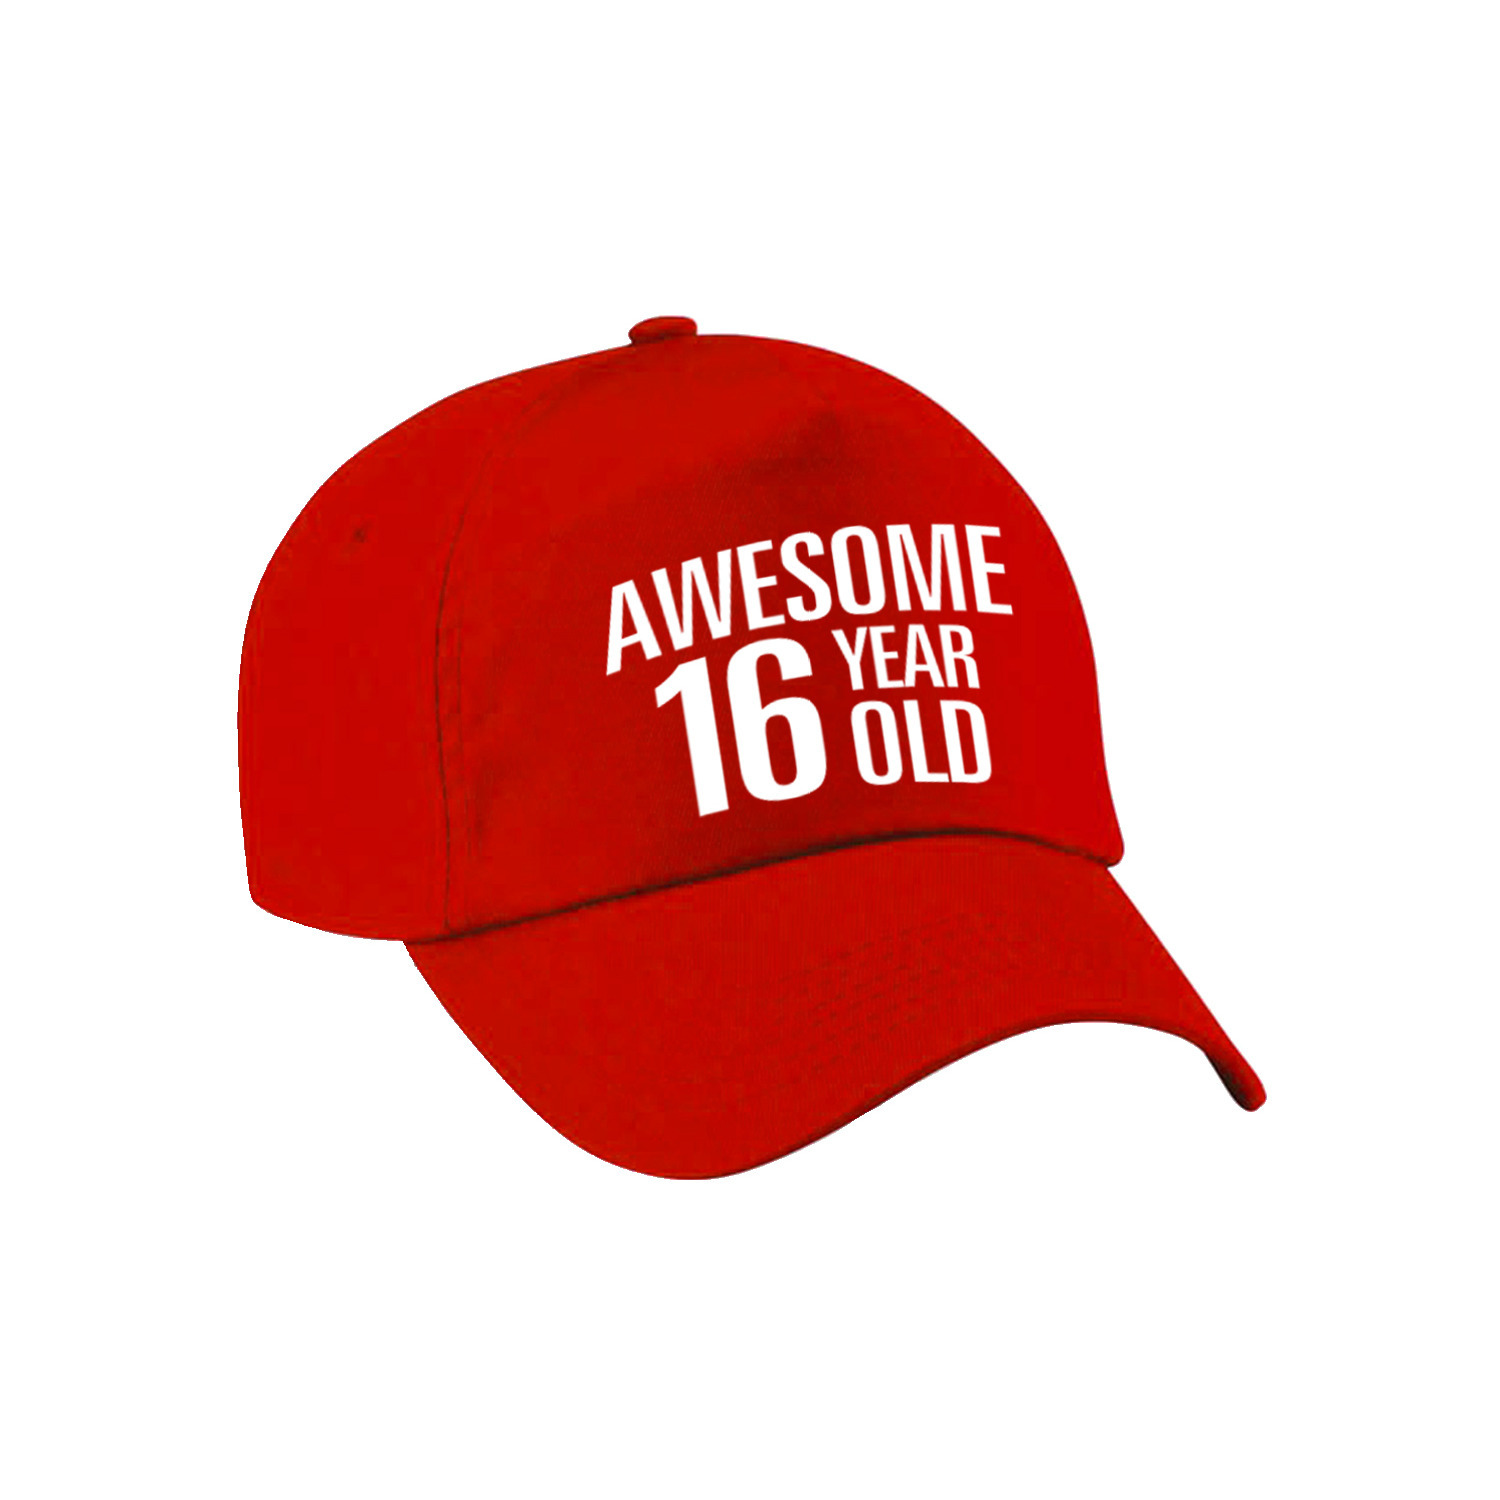 Awesome 16 year old verjaardag pet-cap rood voor dames en heren